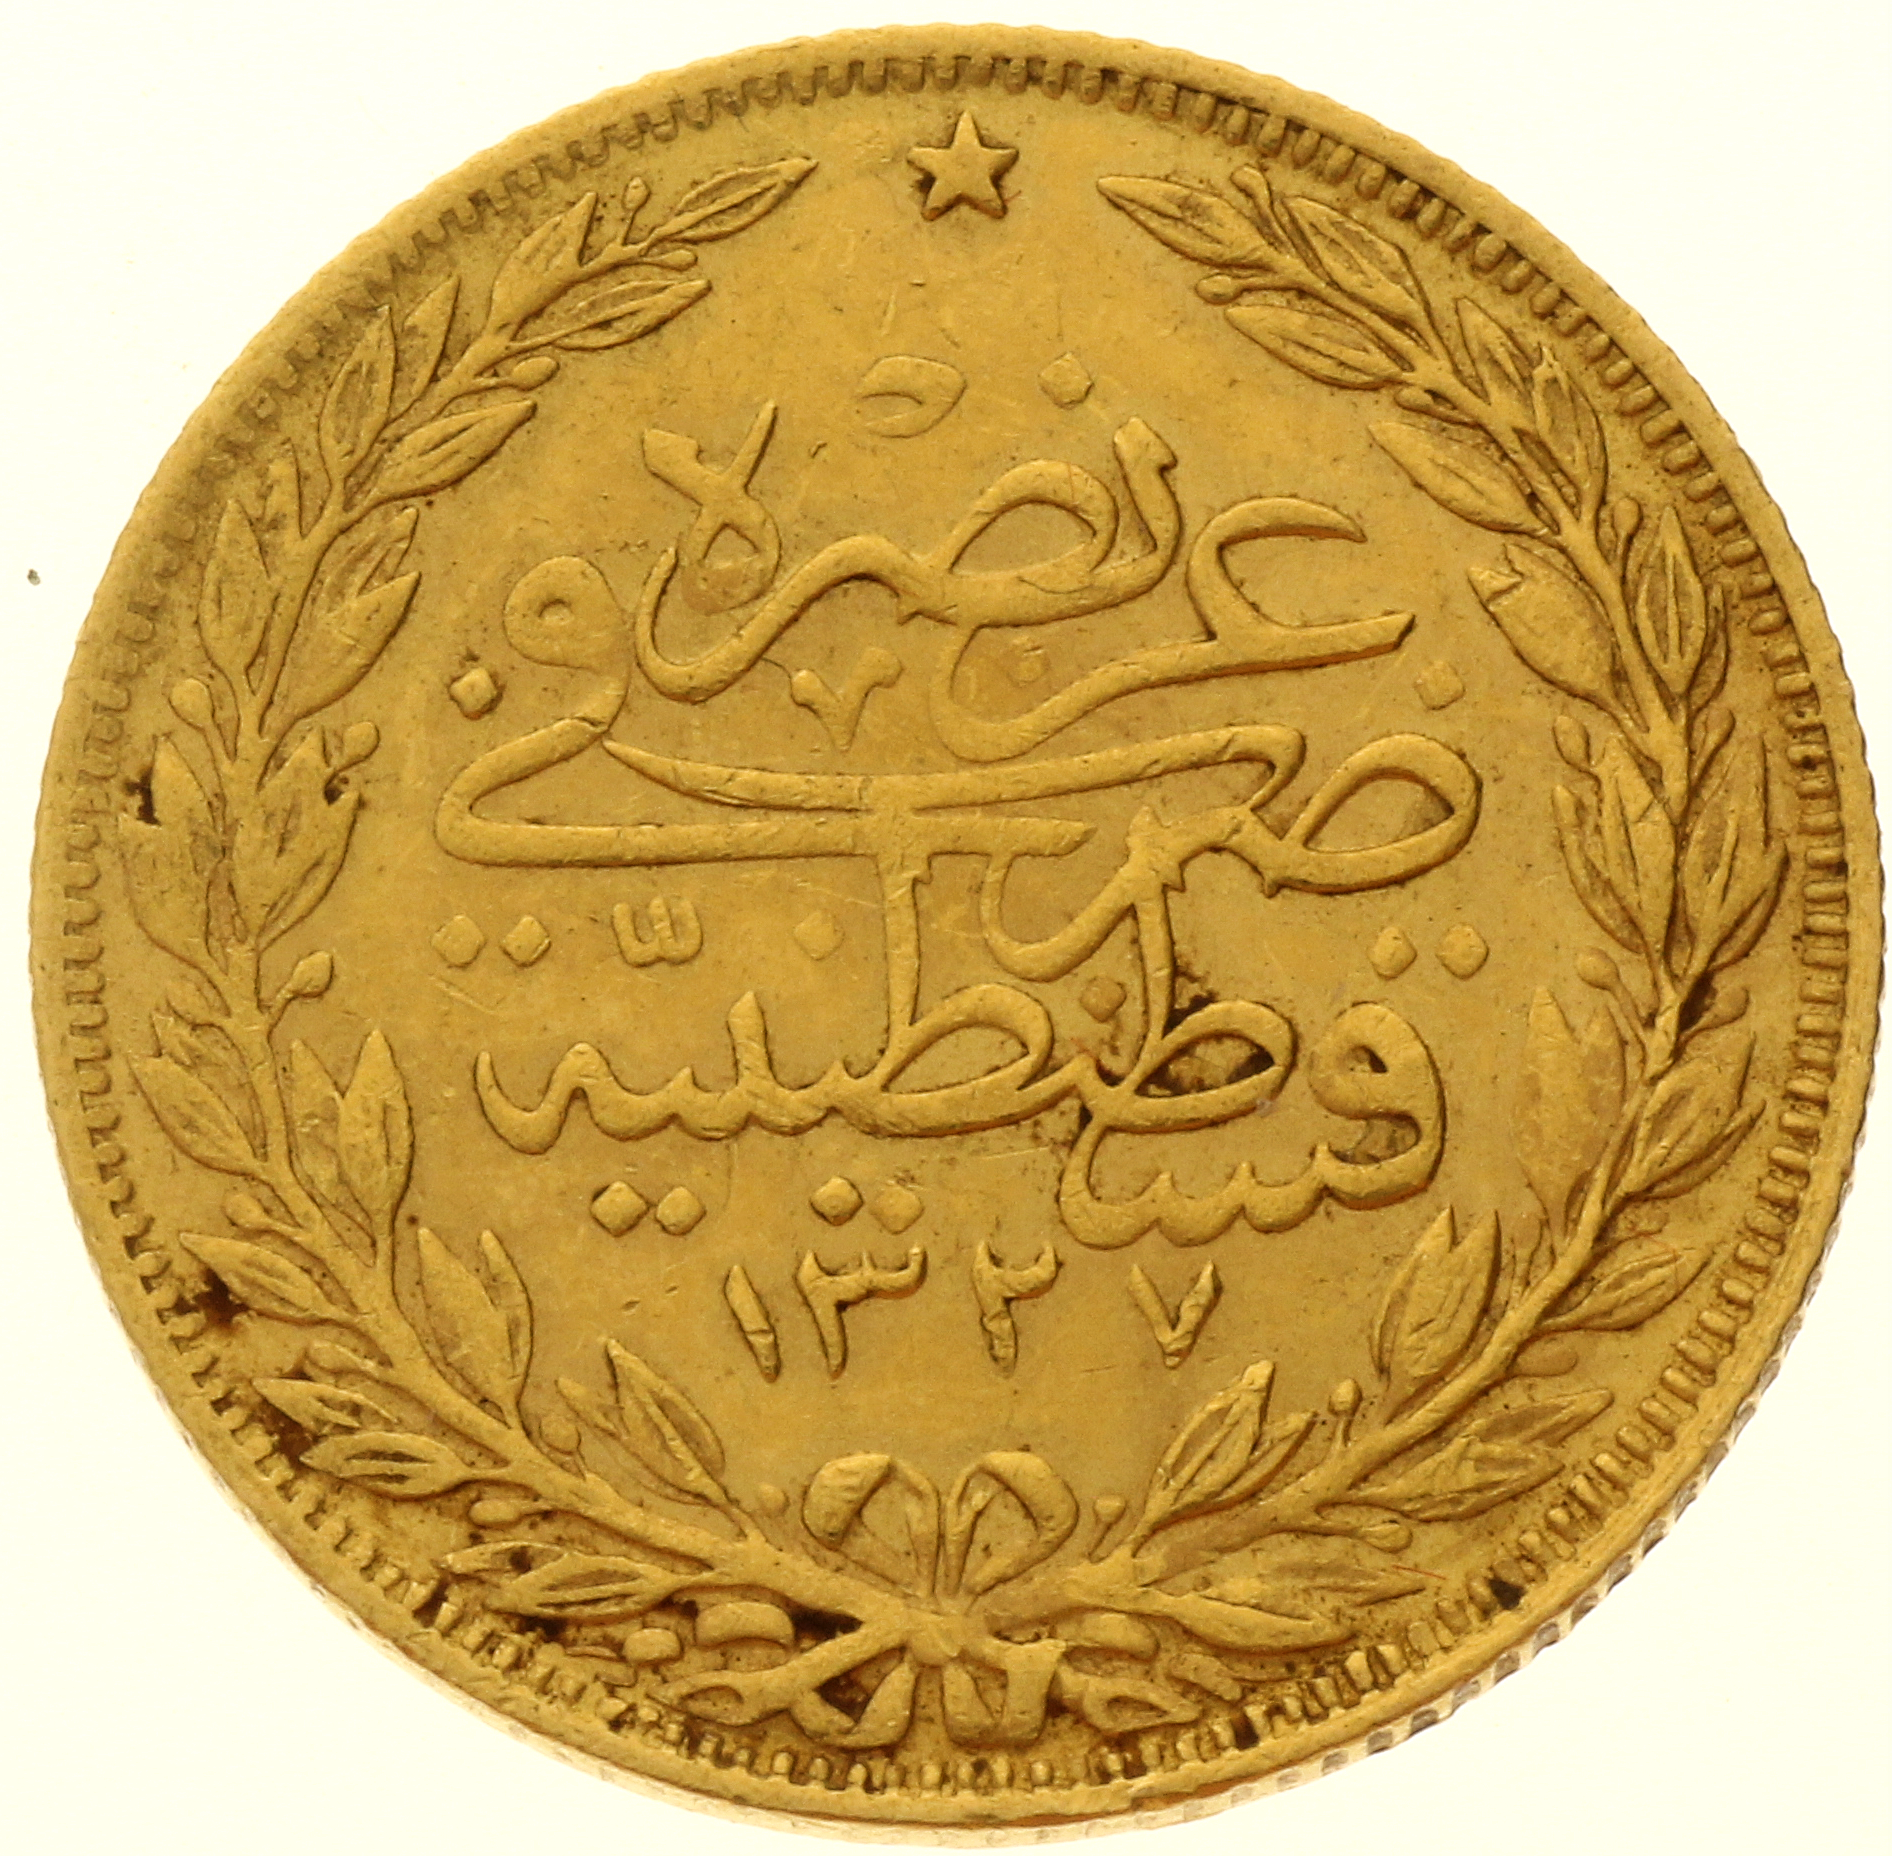 Ottoman Empire - 100 Kurus - AH1327/3(1912) - Mehmed V - "Reshat" right of Toughra